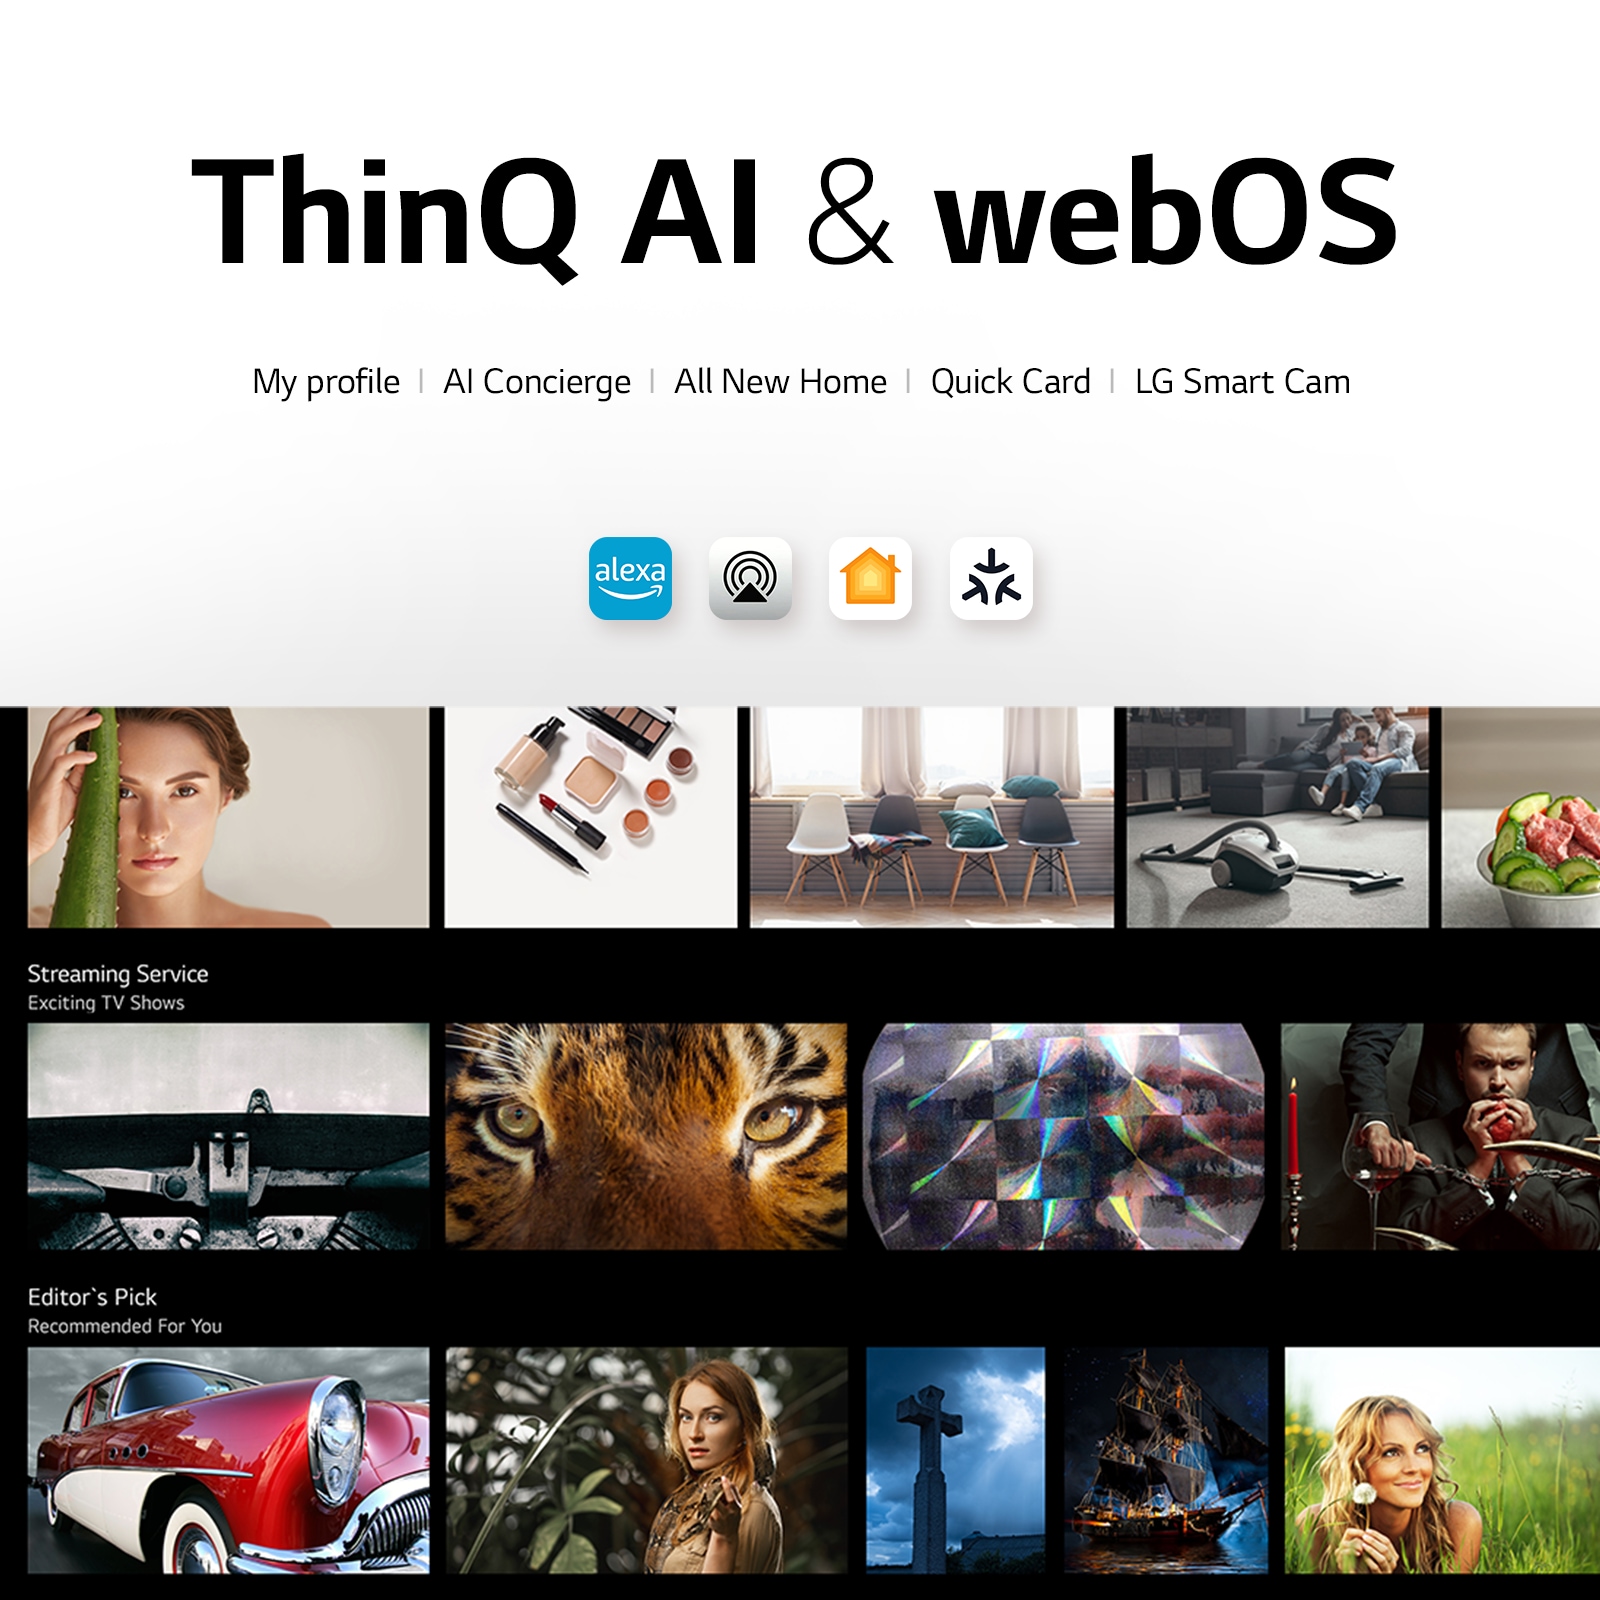 ThinQ AI & webOS